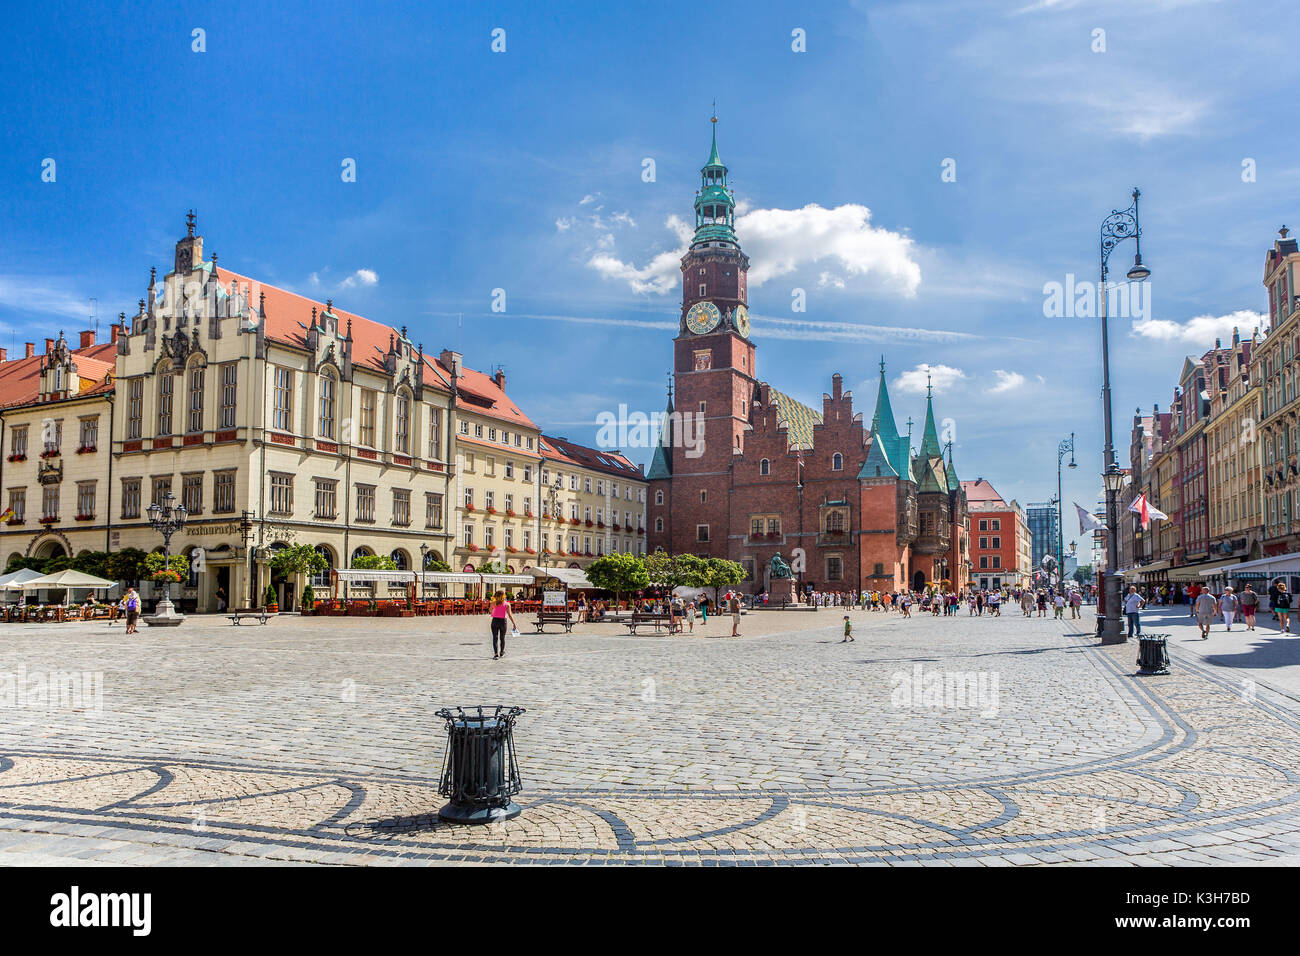 Poland, Wroclaw City, Market Square, Town Hall Building Rynek, Fredro Monument. Stock Photo